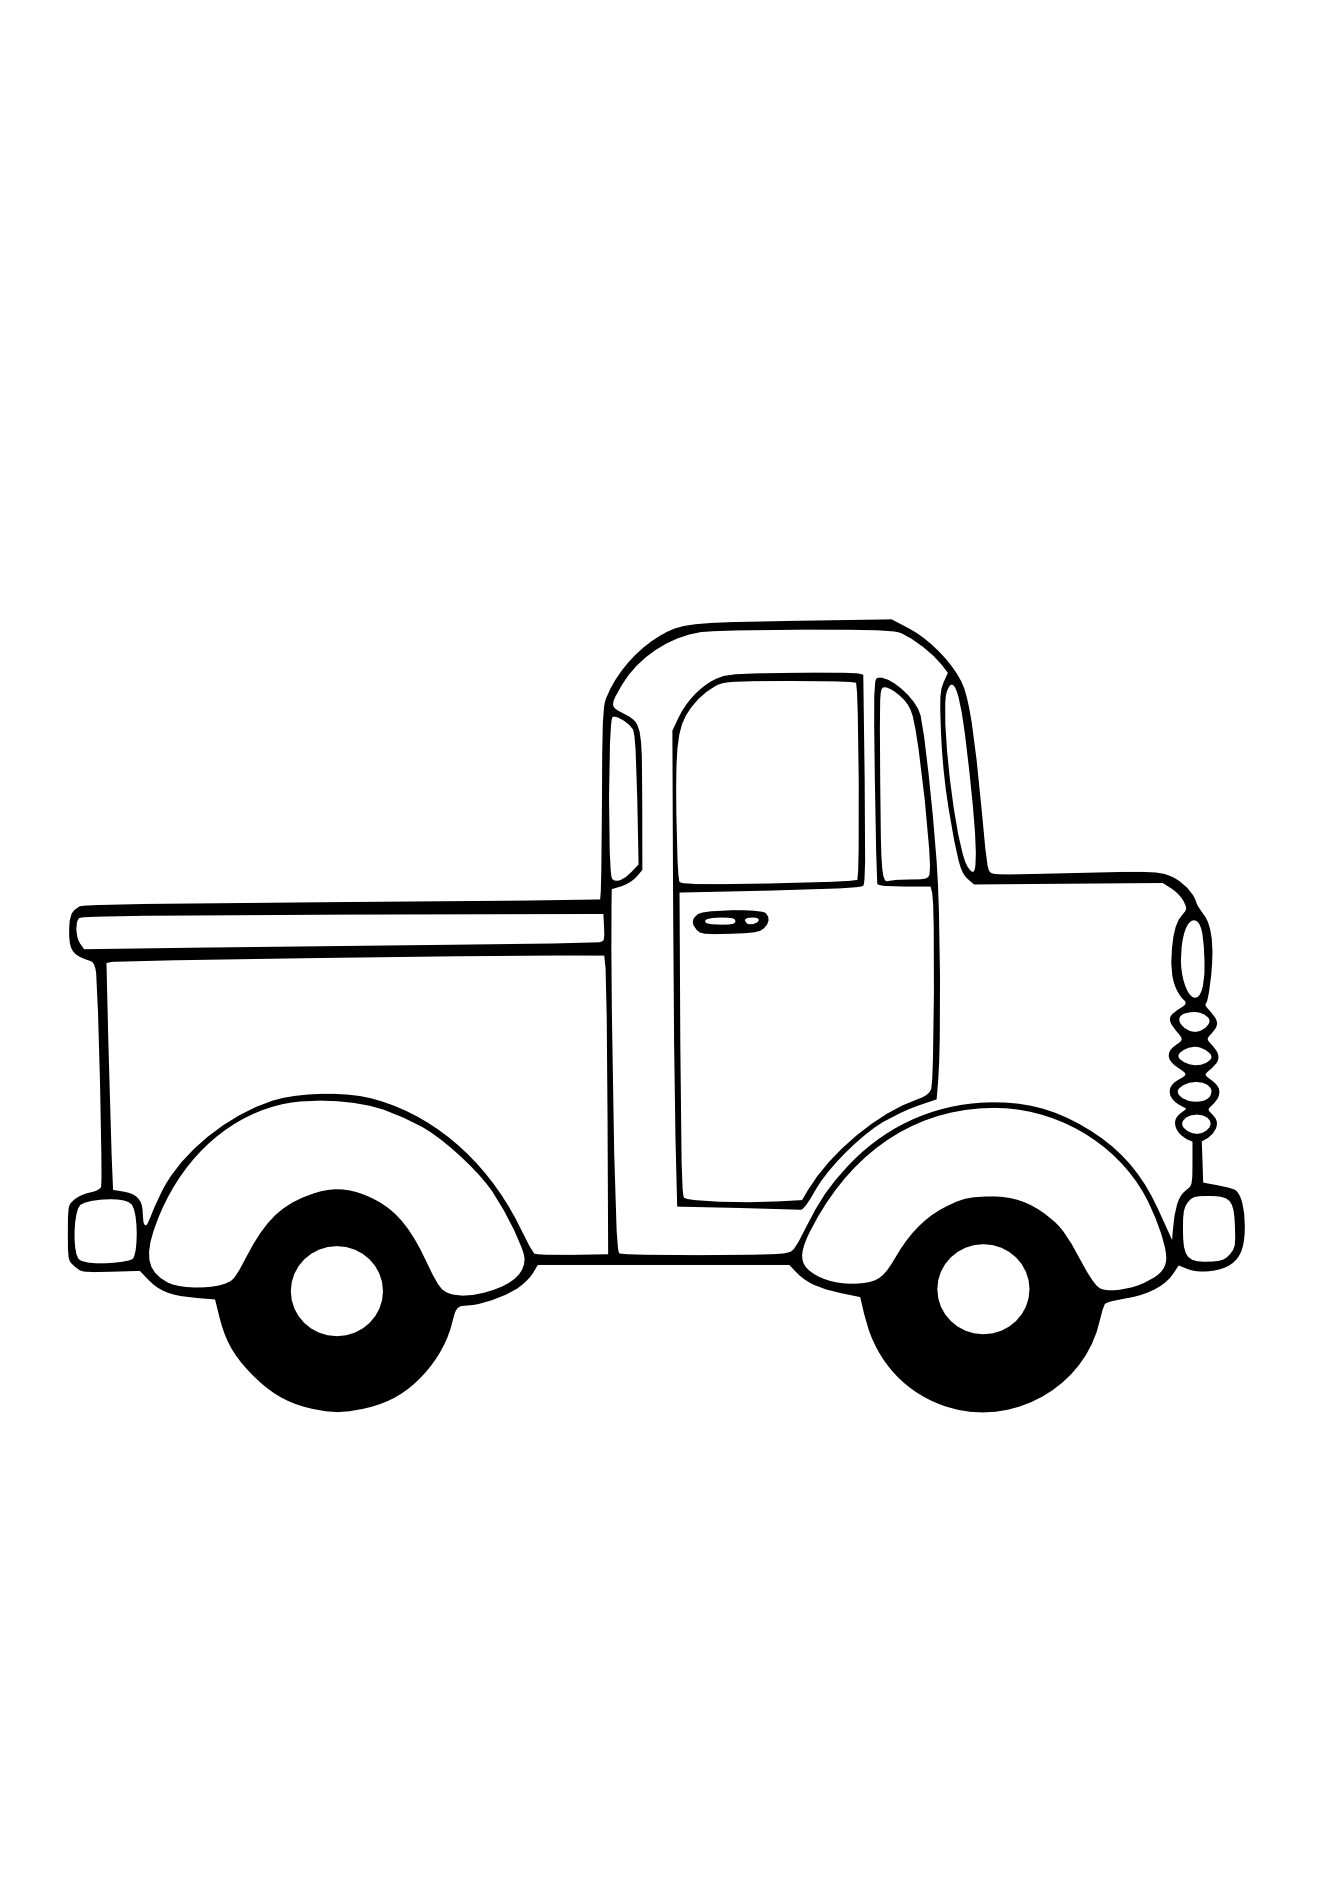 Semi Truck Clipart Black And White   Clipart Panda   Free Clipart